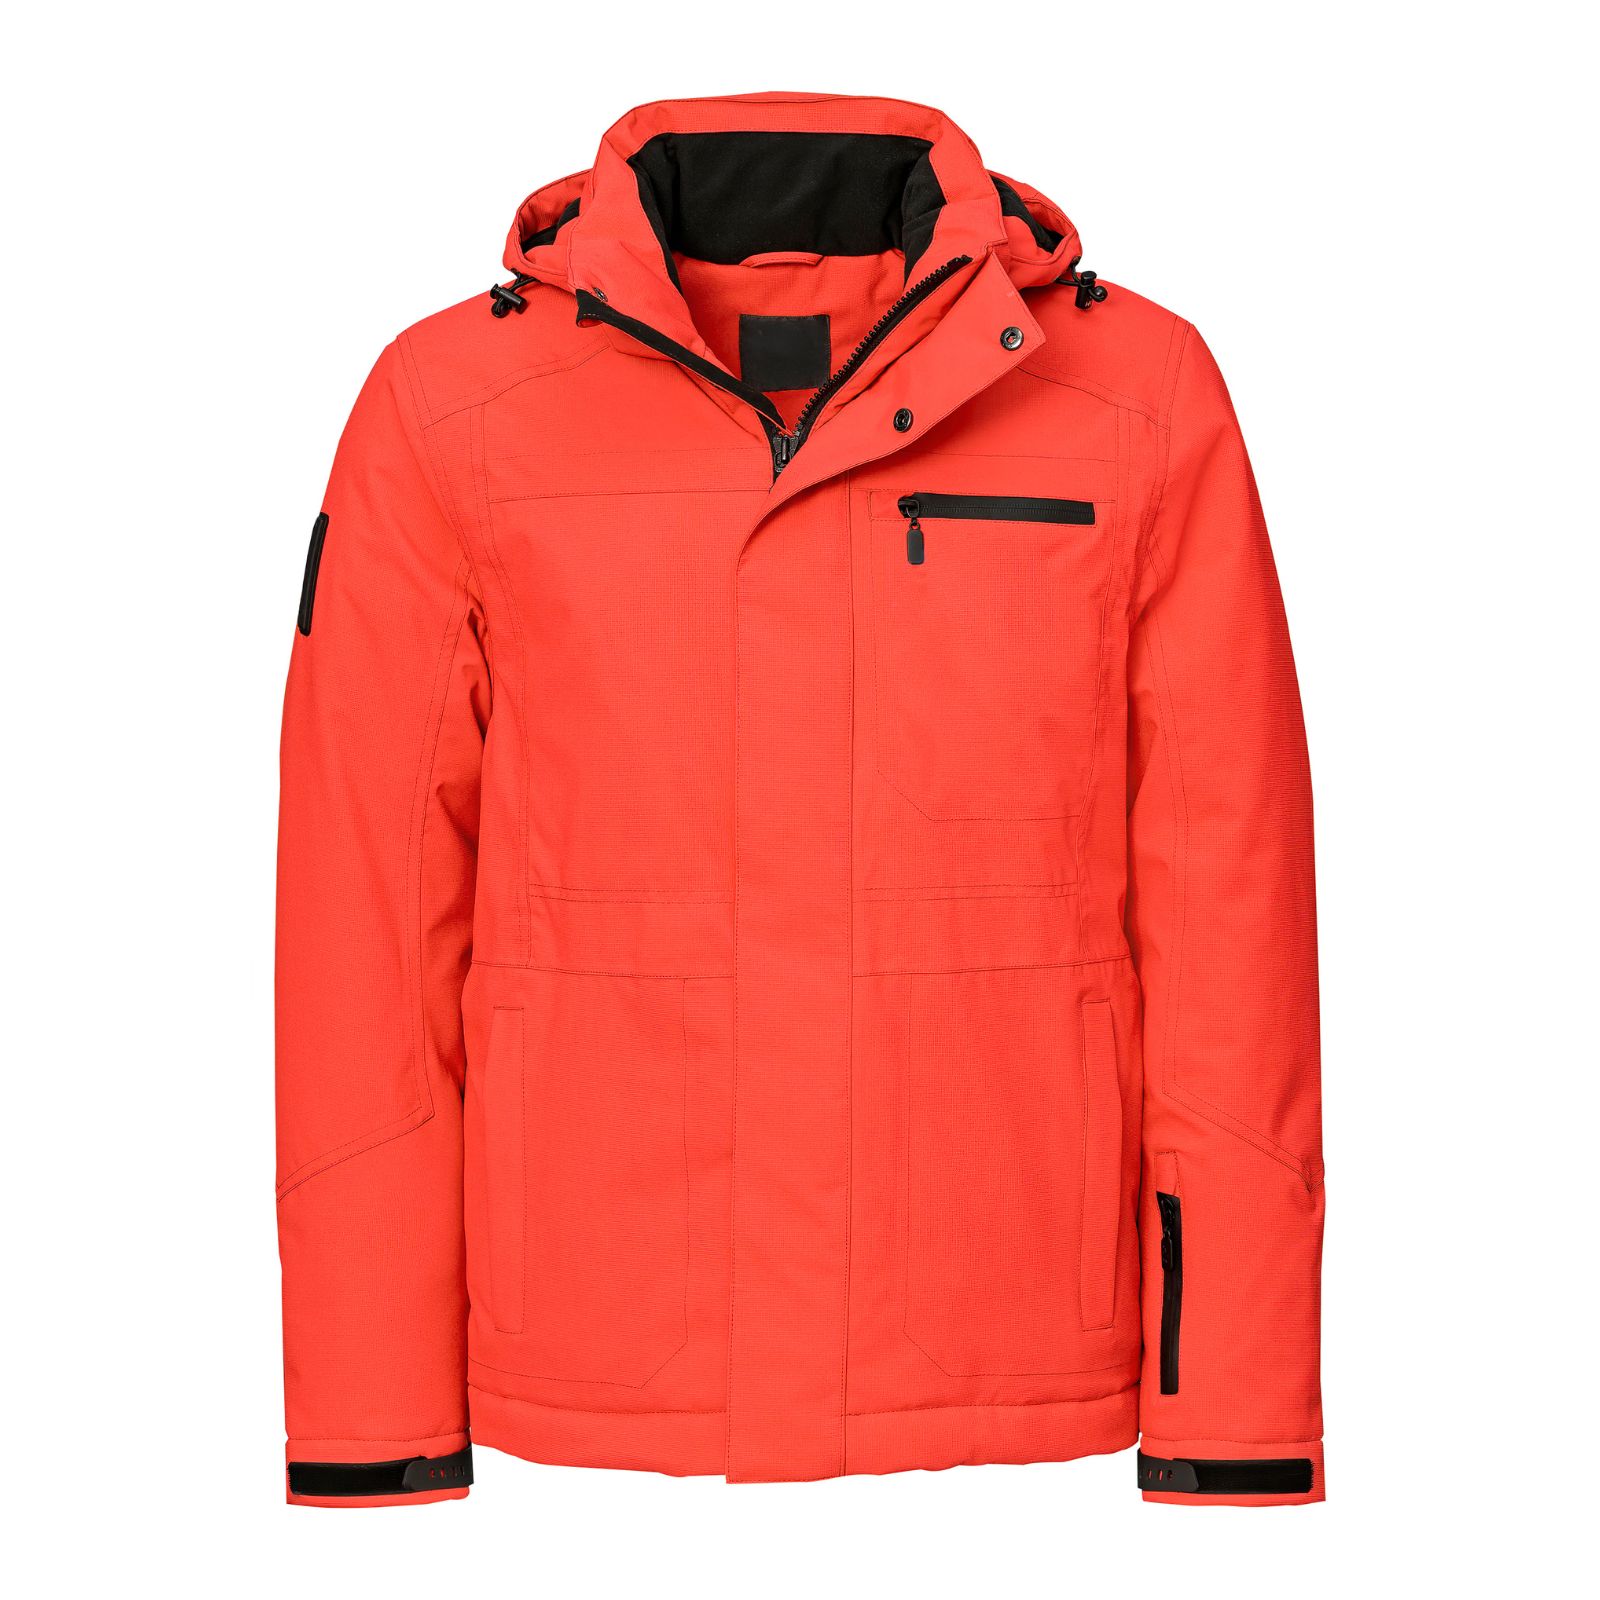 Premium Quality 100 Percent Orange Soft Shell Jacket.